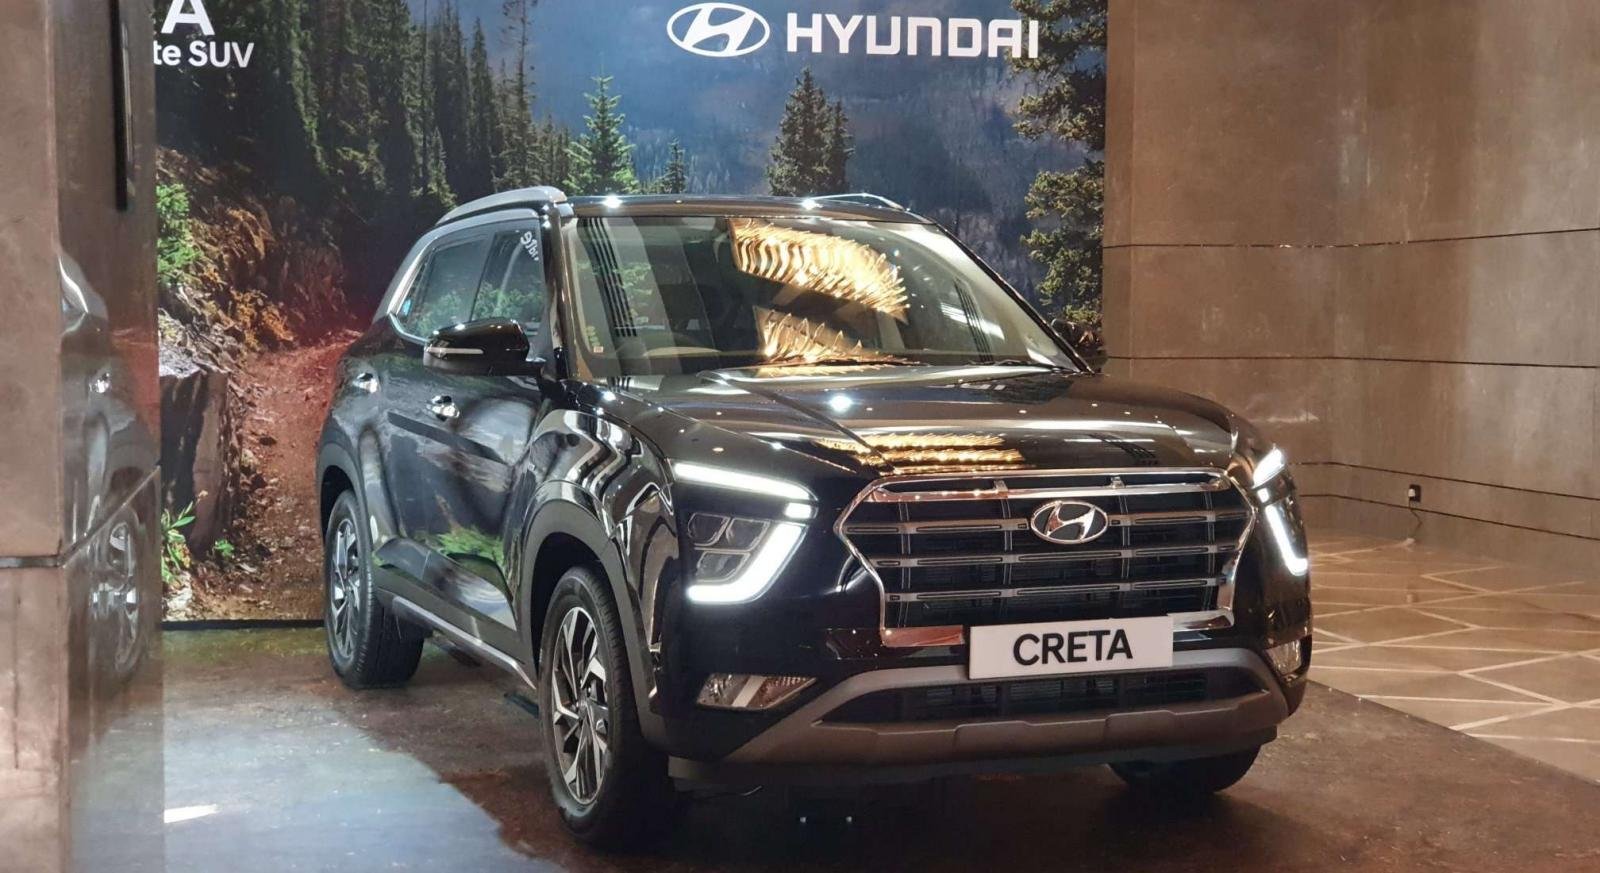 Hyundai Creta 2020 front look